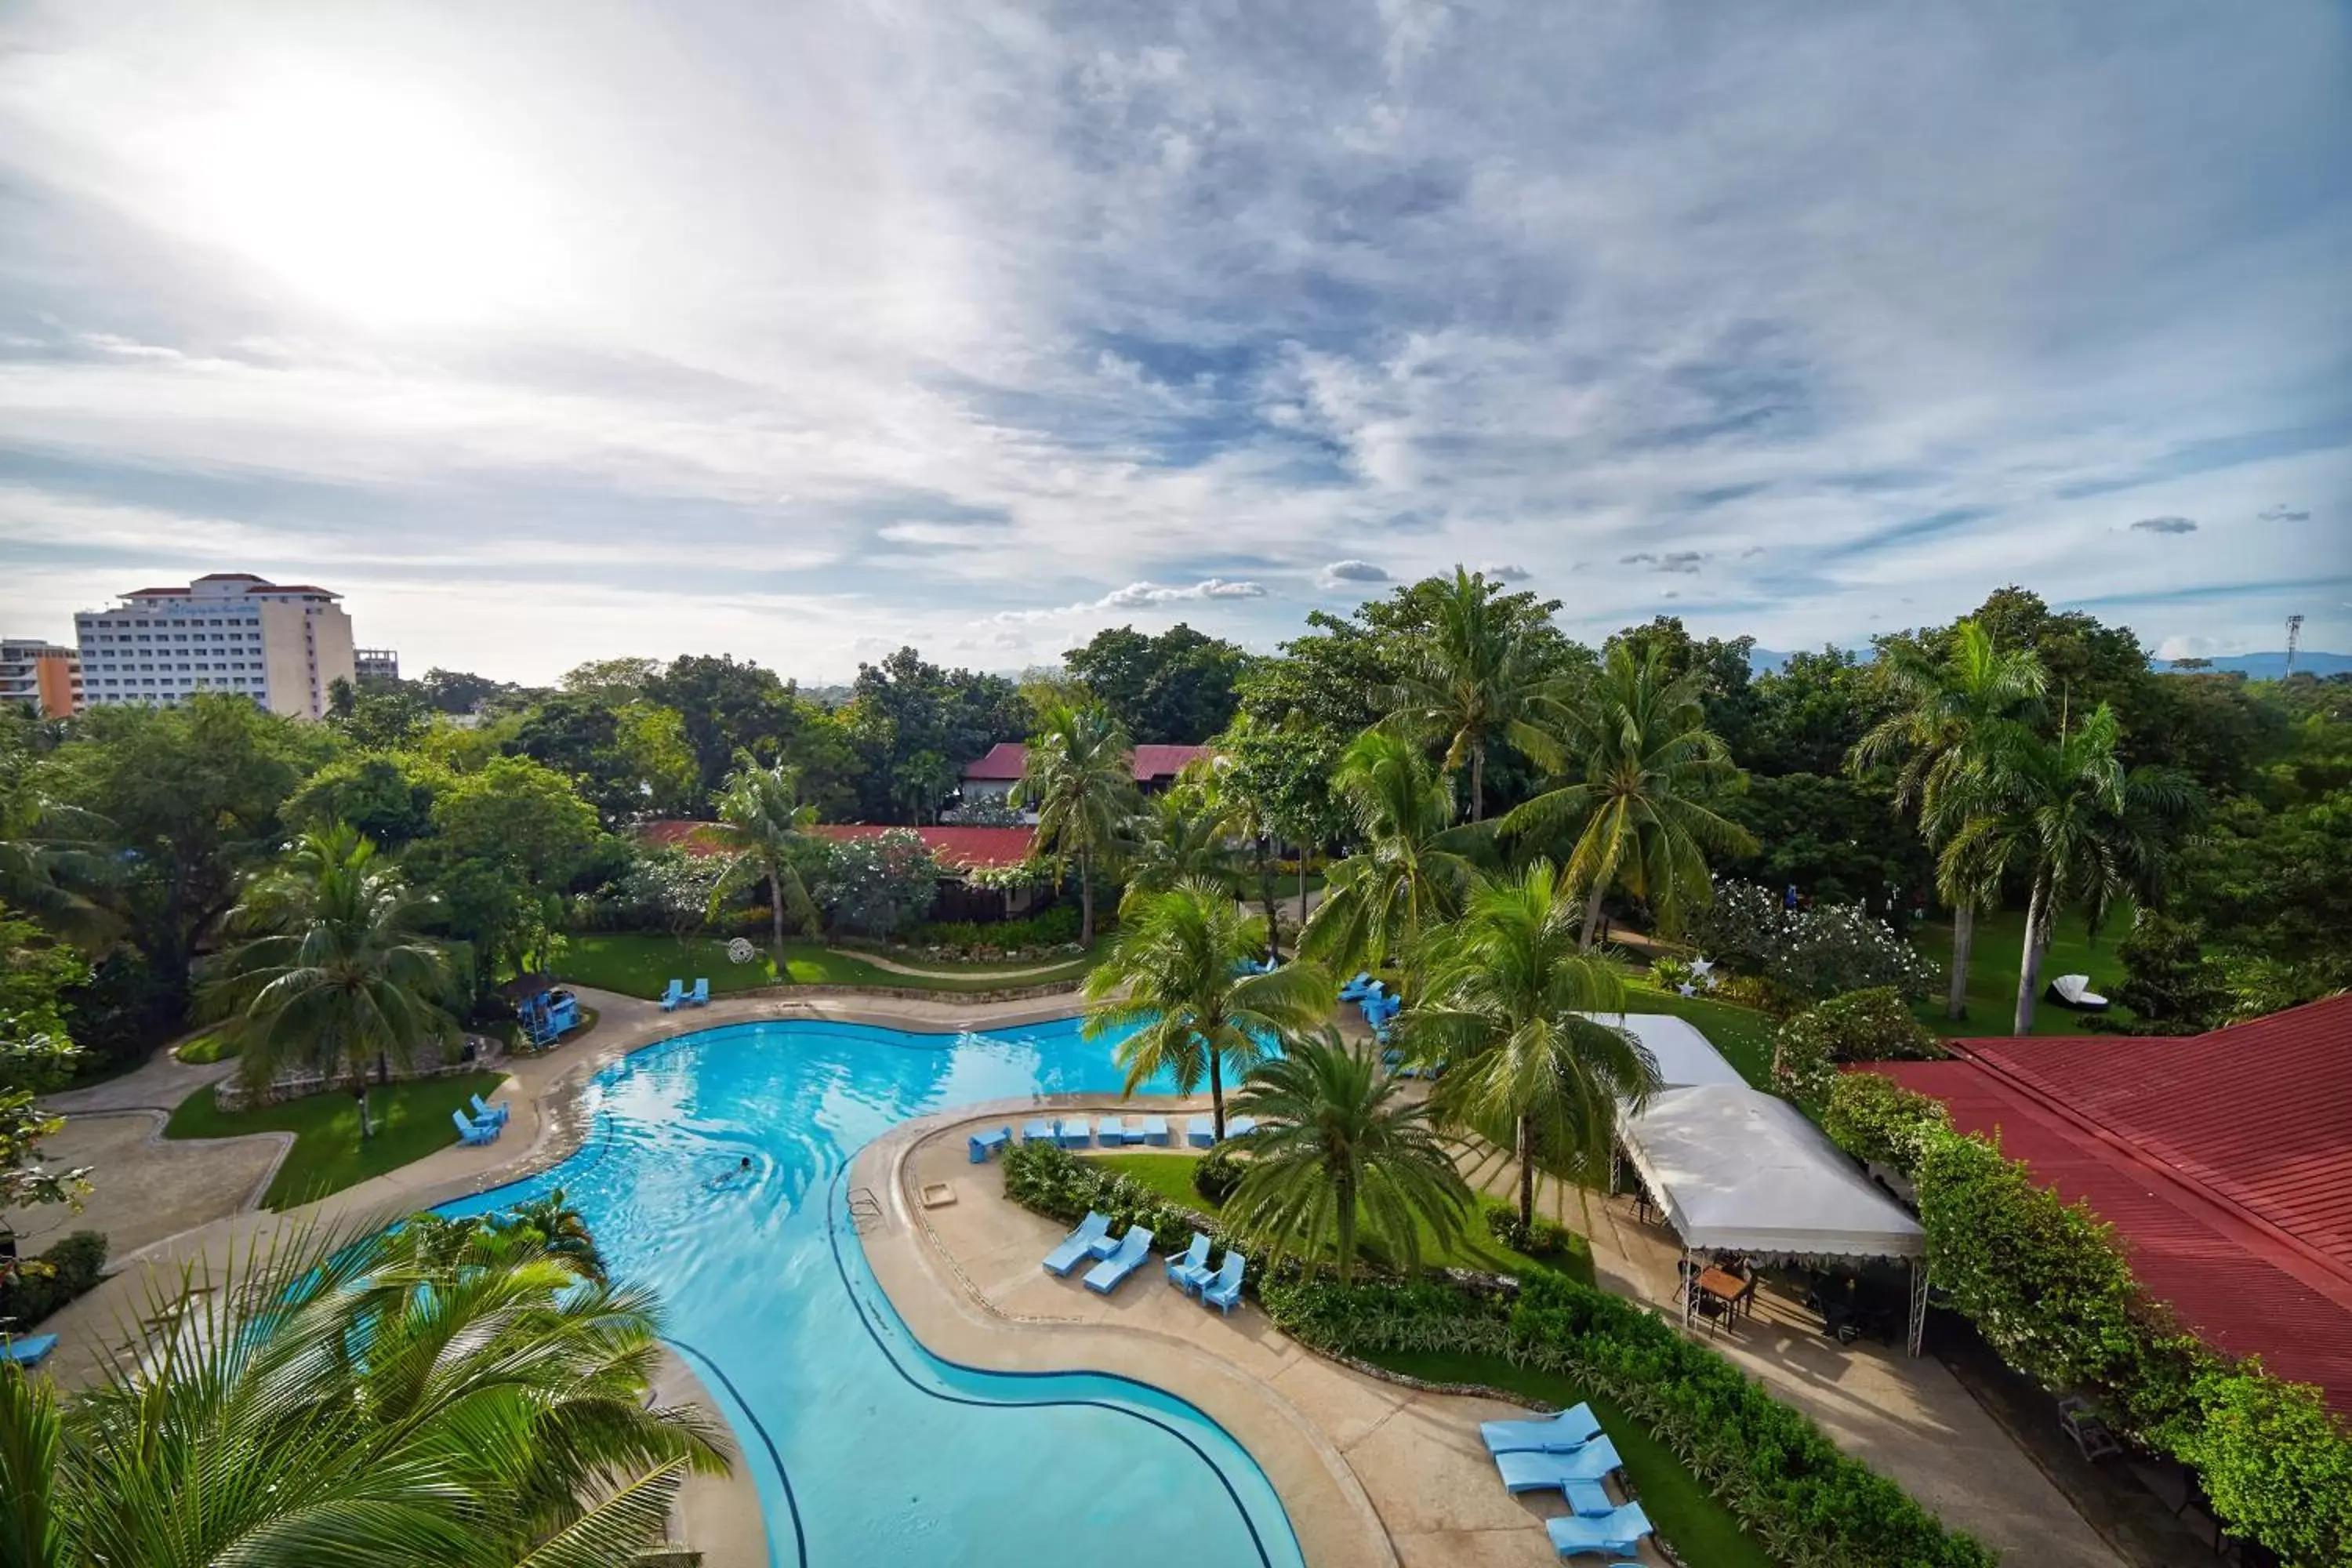 Bird's eye view, Pool View in Cebu White Sands Resort and Spa